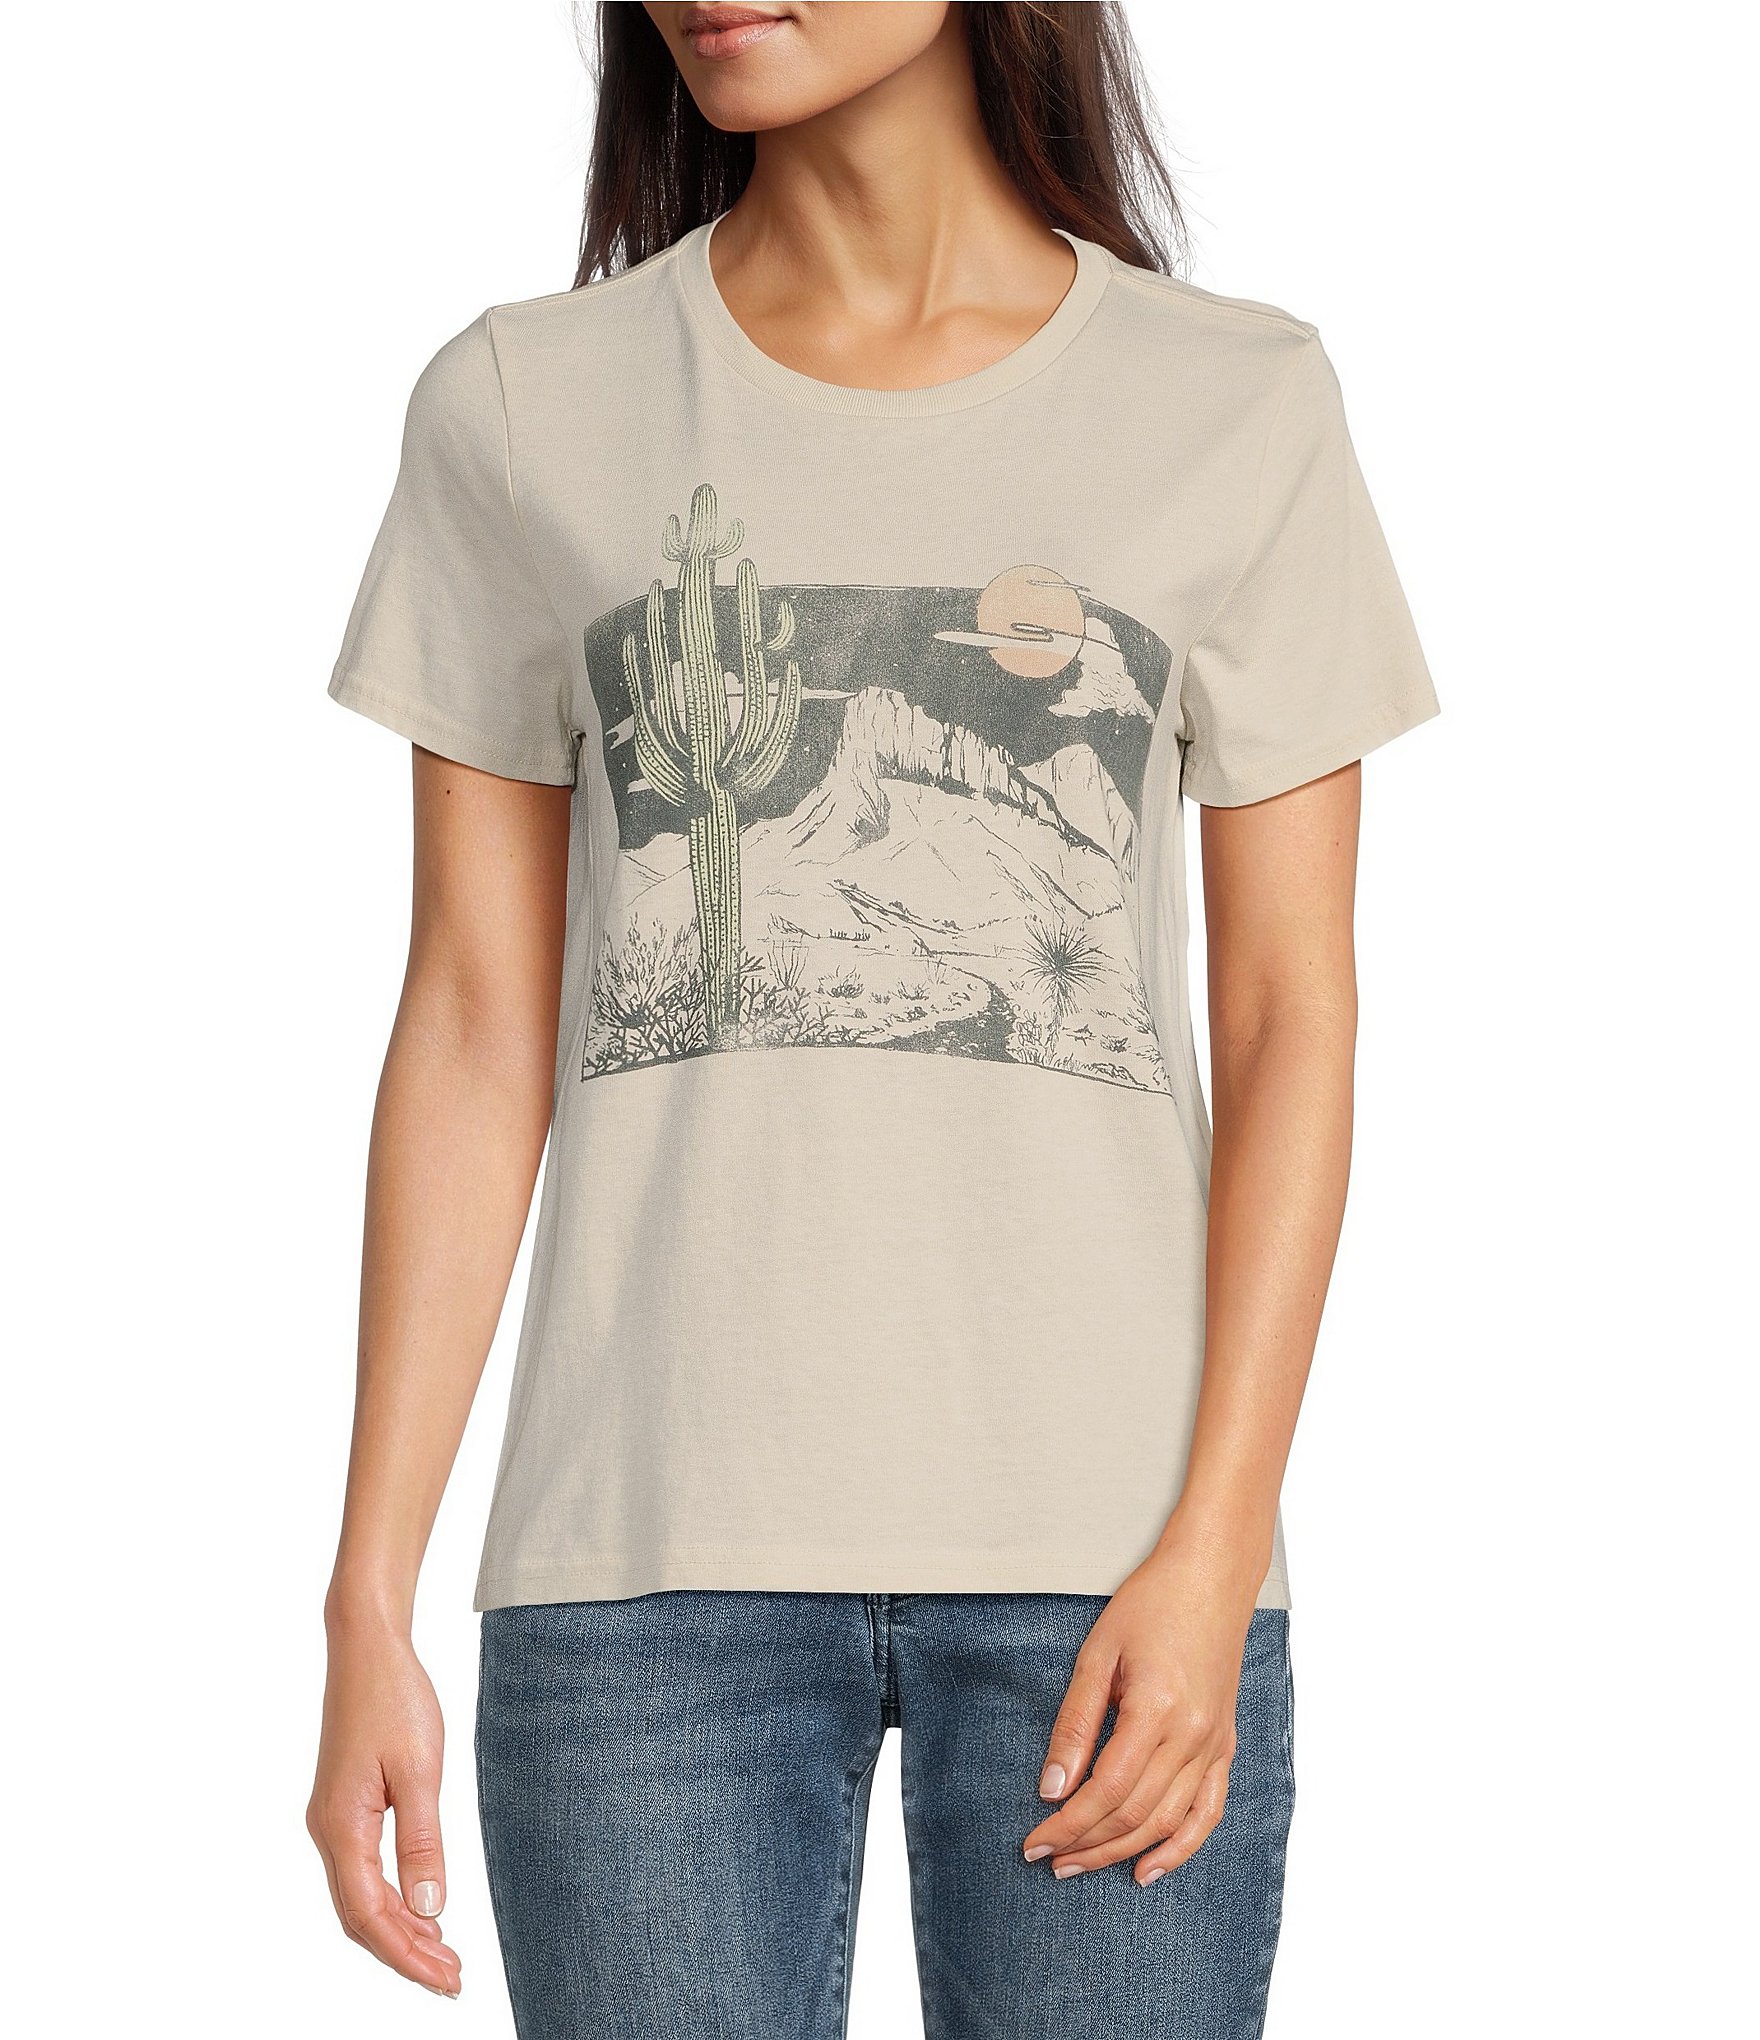 Womens LUCKY BRAND Cactus Club Graphic Tee T Shirt White Cotton Blend L XL  XXL